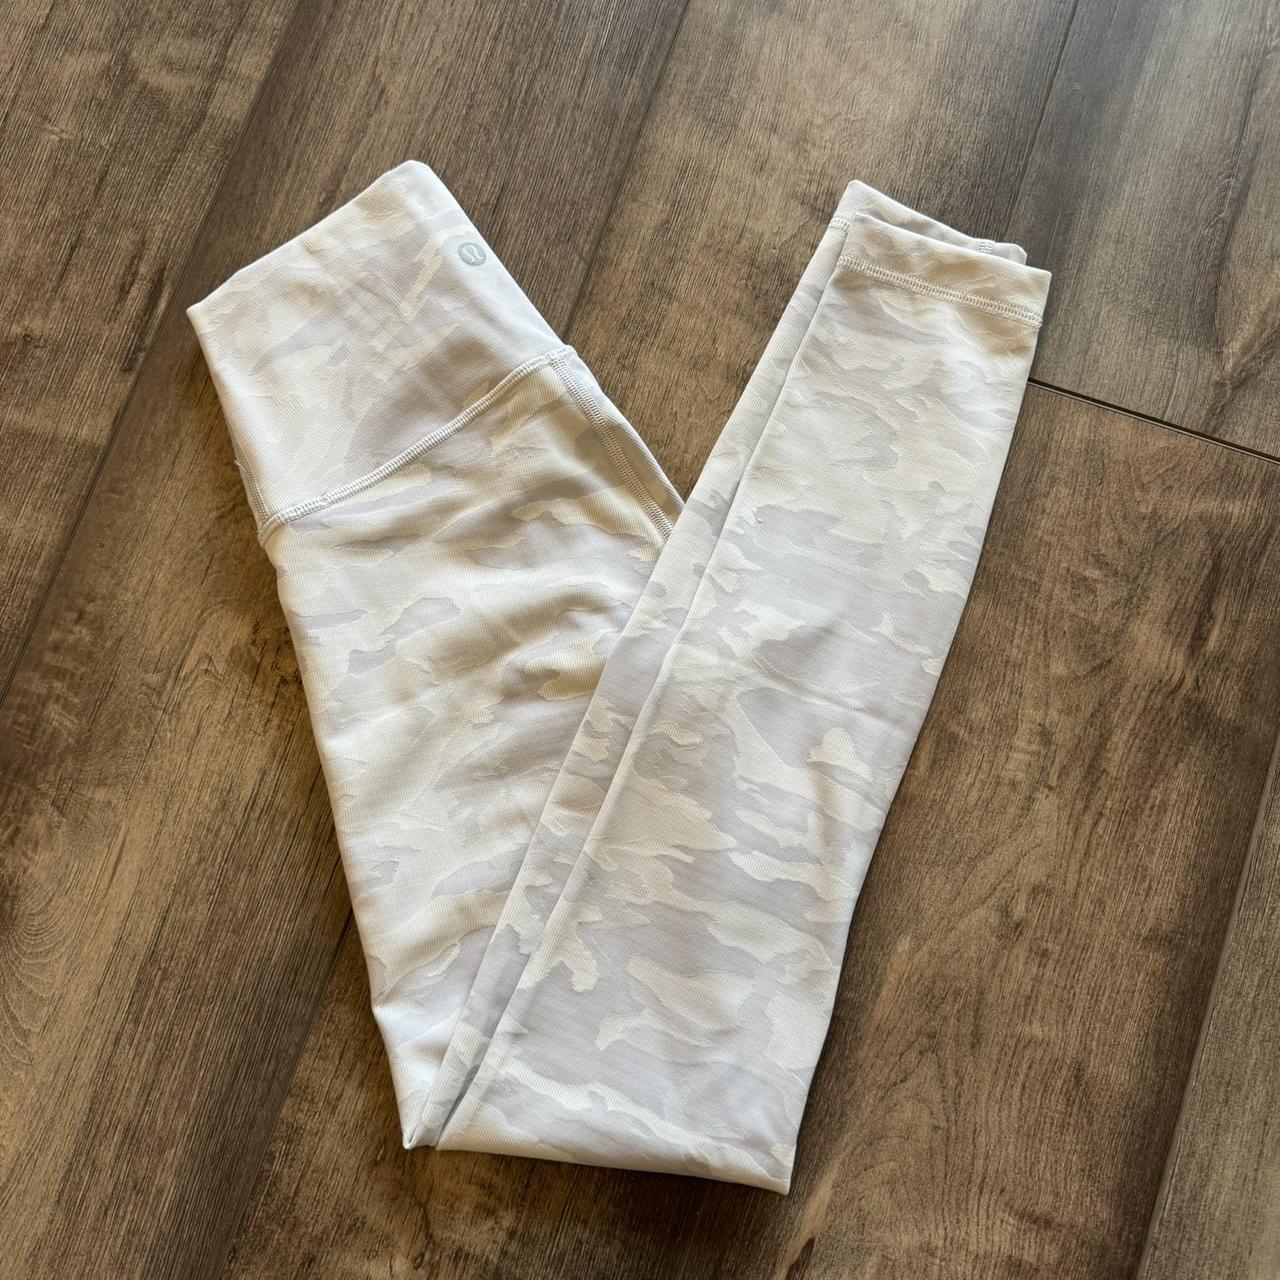 White and grey camo lululemon leggings 25’, Worn